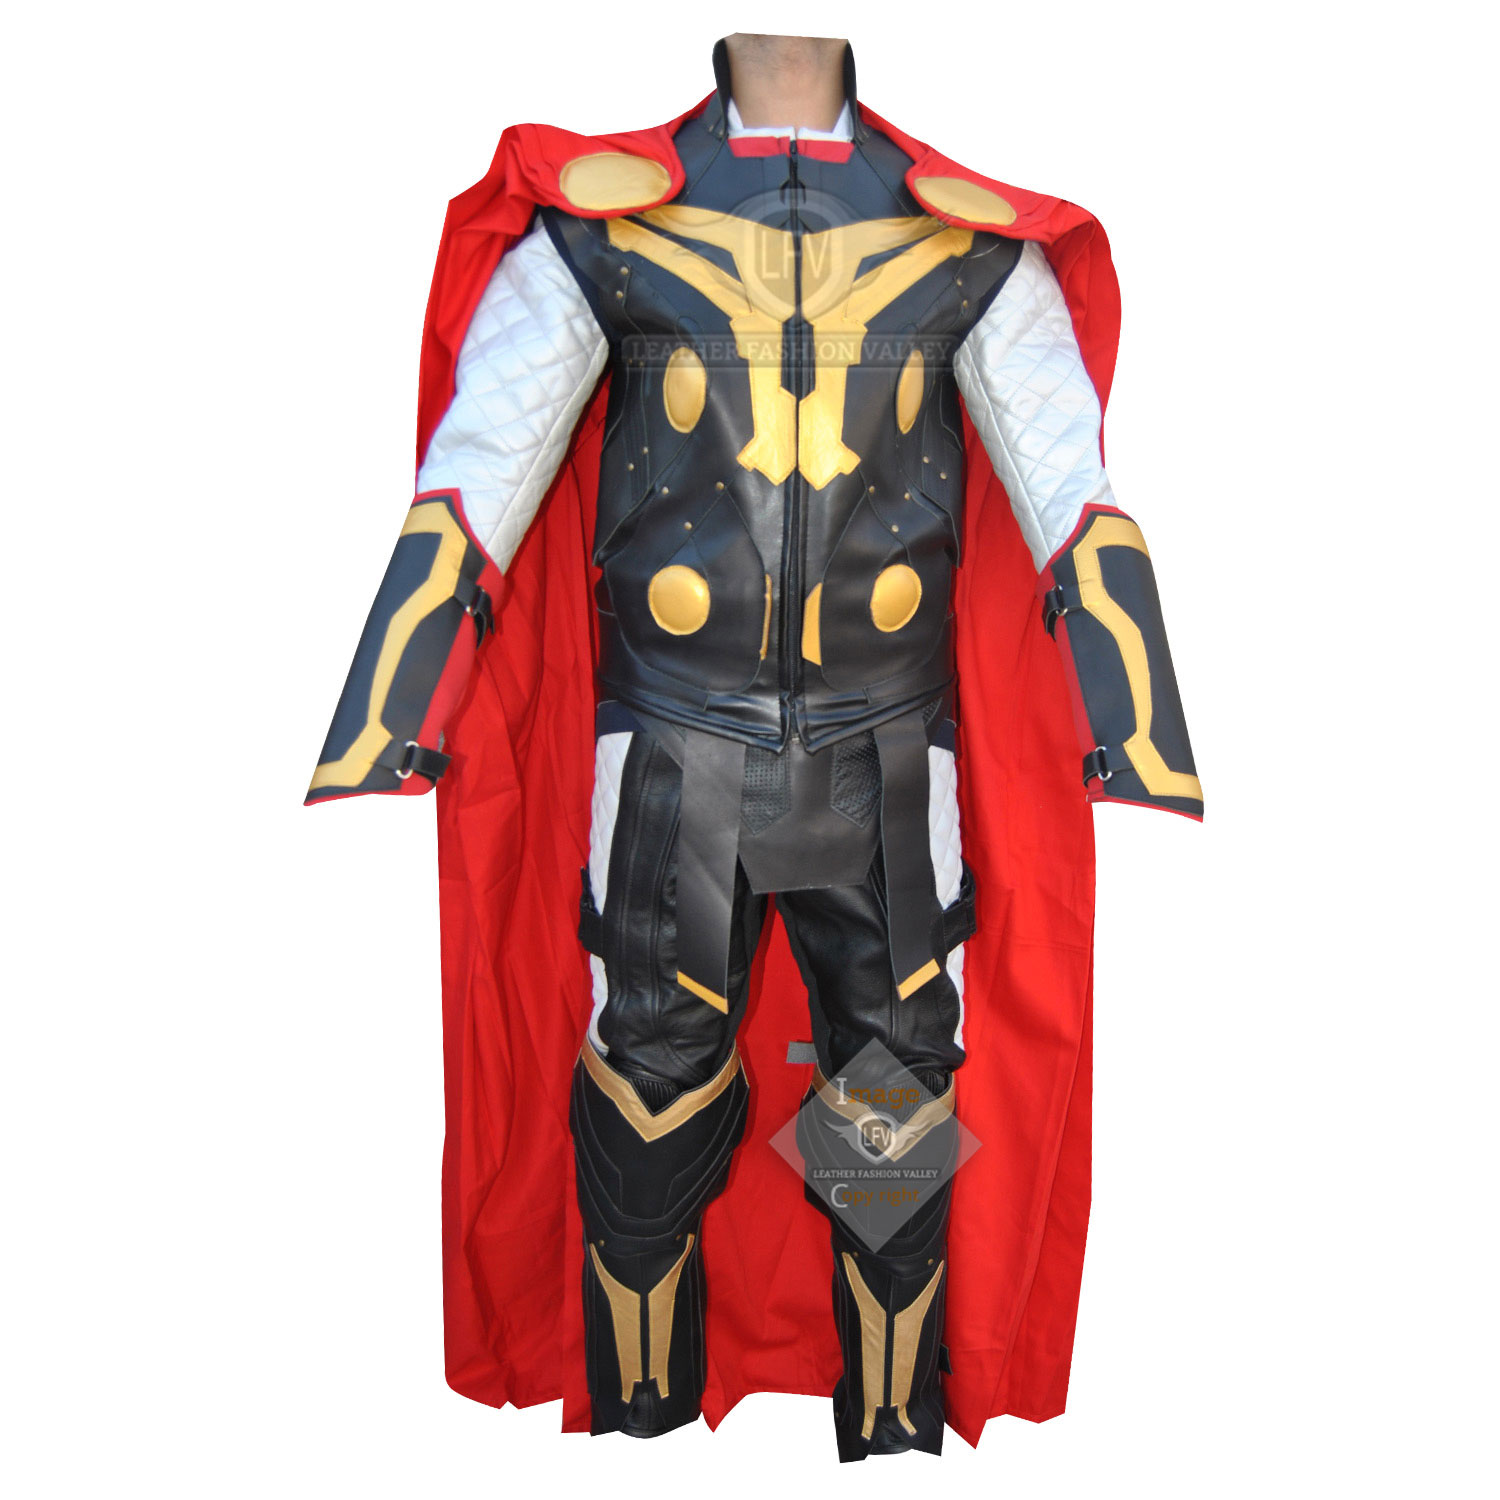 Avengers Age of Ultron Thor Cosplay Costume custom made V02 